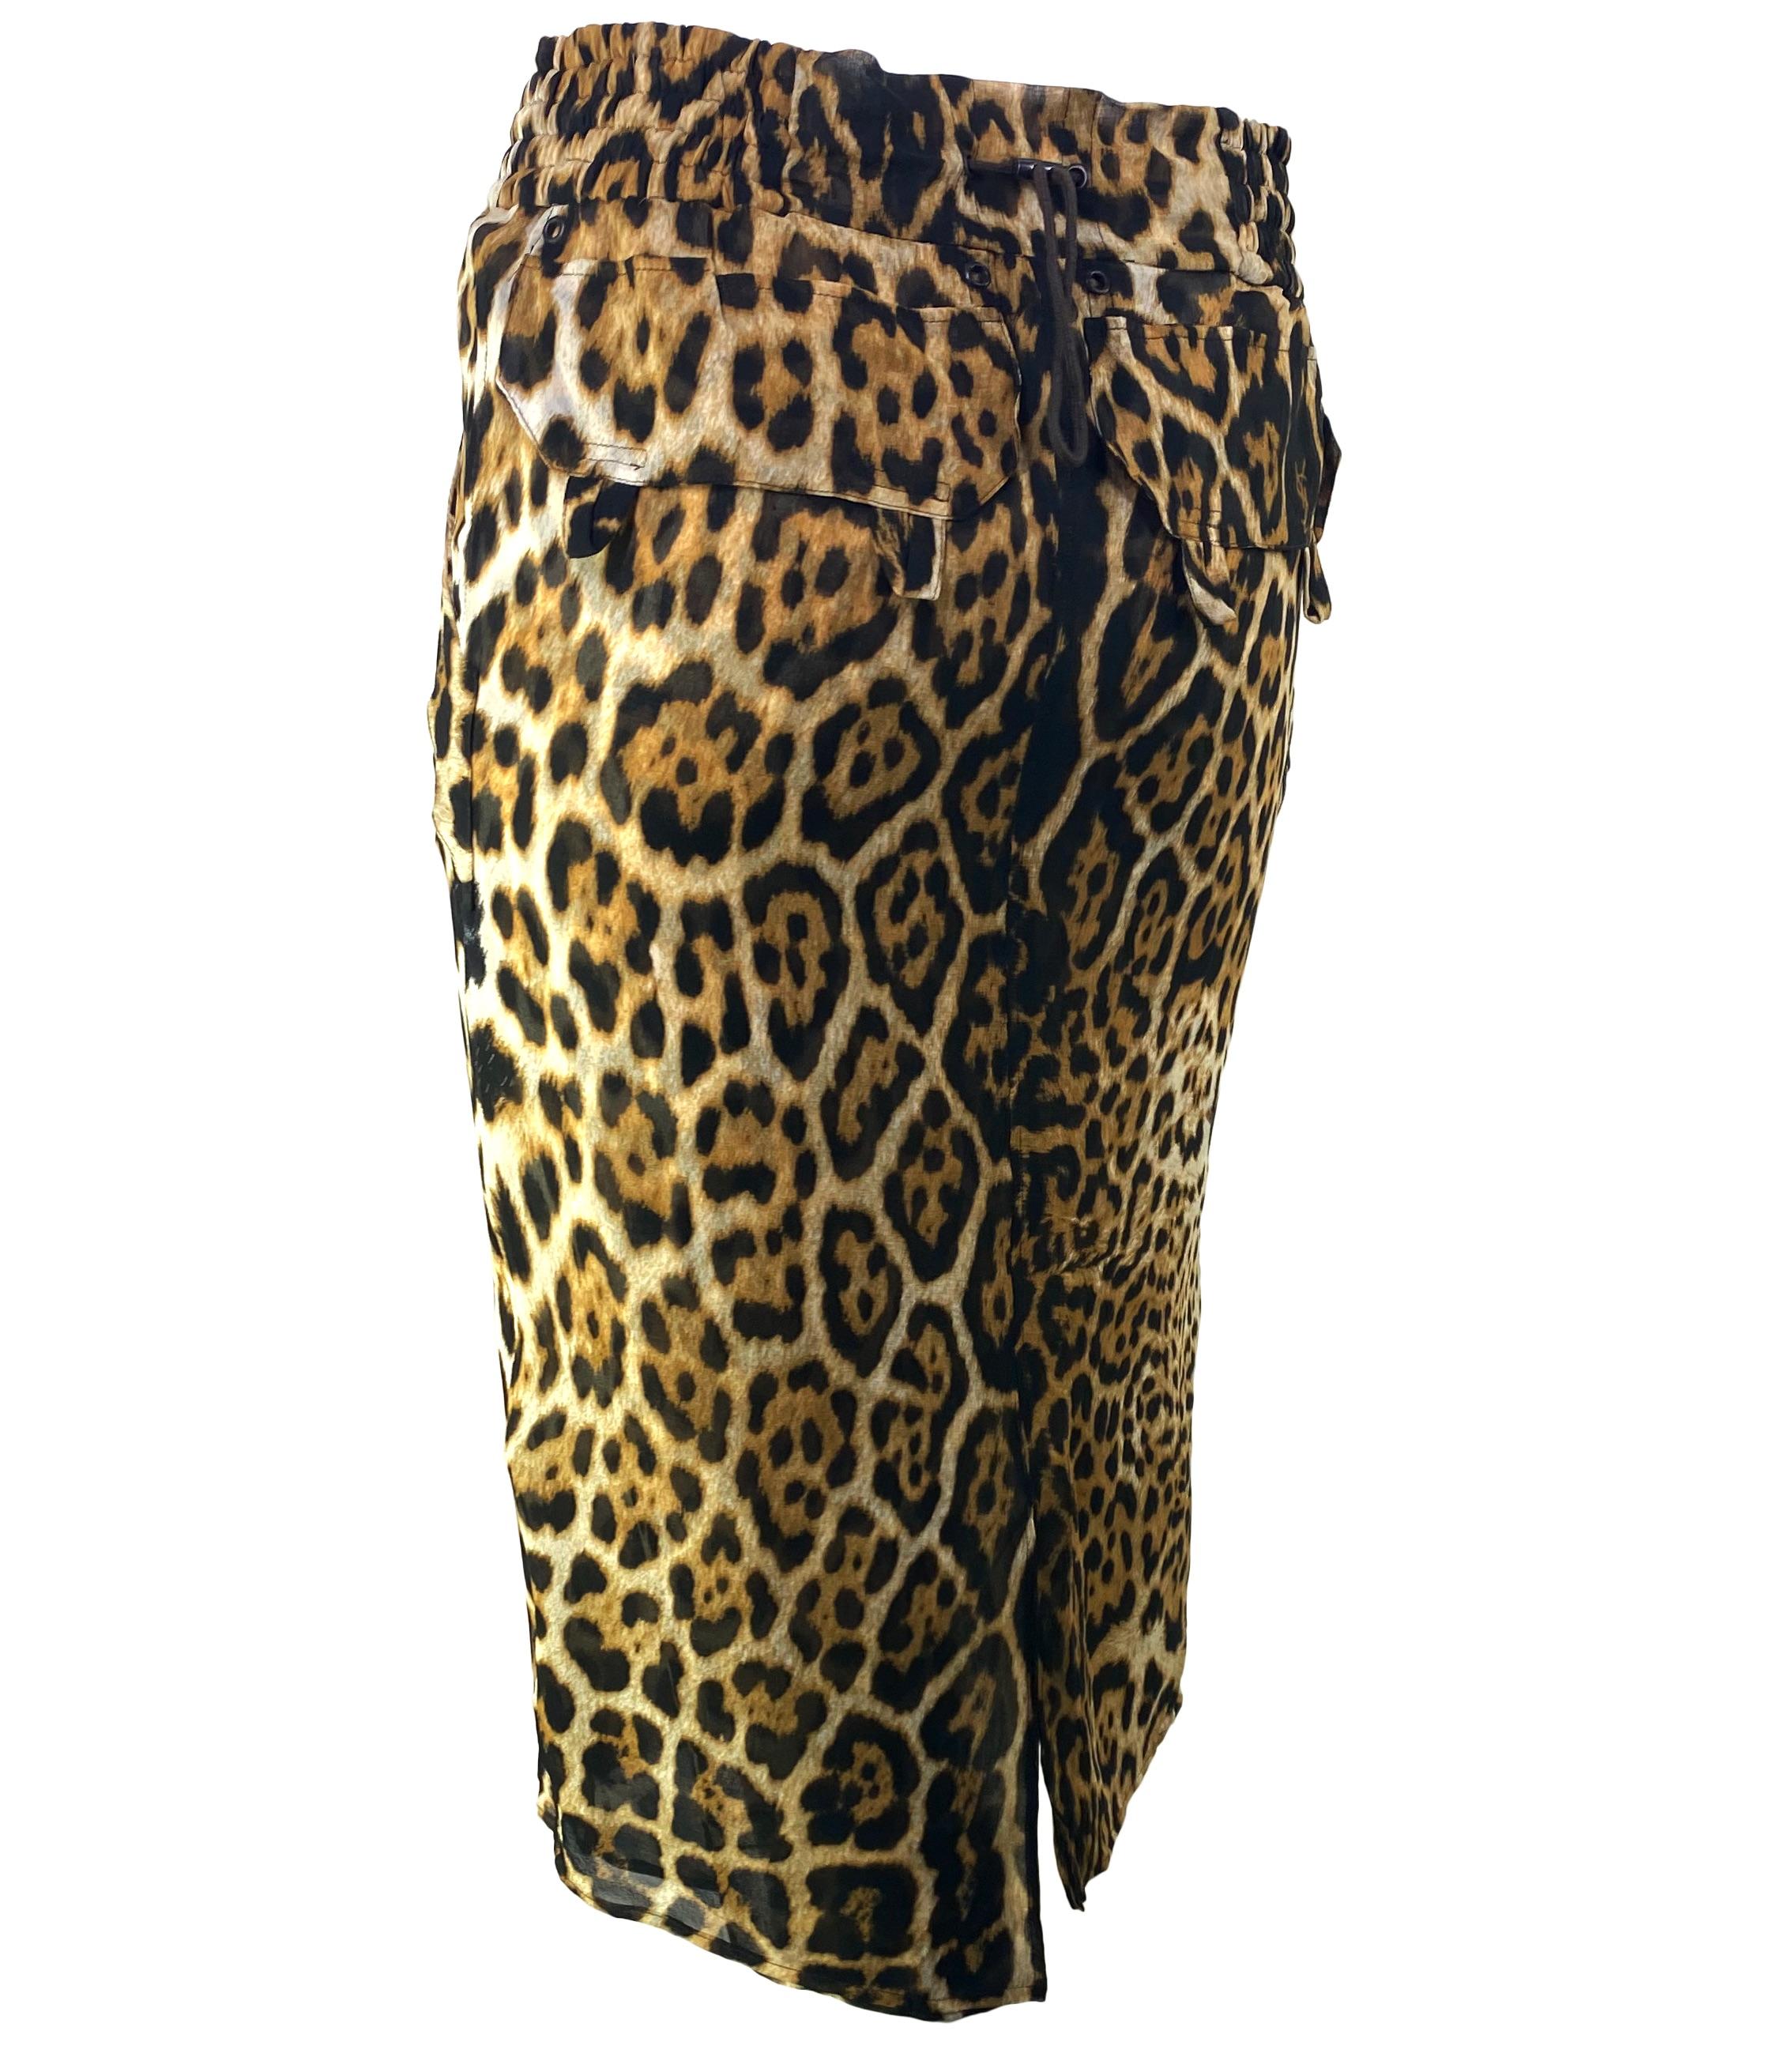 S/S 2002 Yves Saint Laurent by Tom Ford Safari Runway Cheetah Print Skirt Set For Sale 5